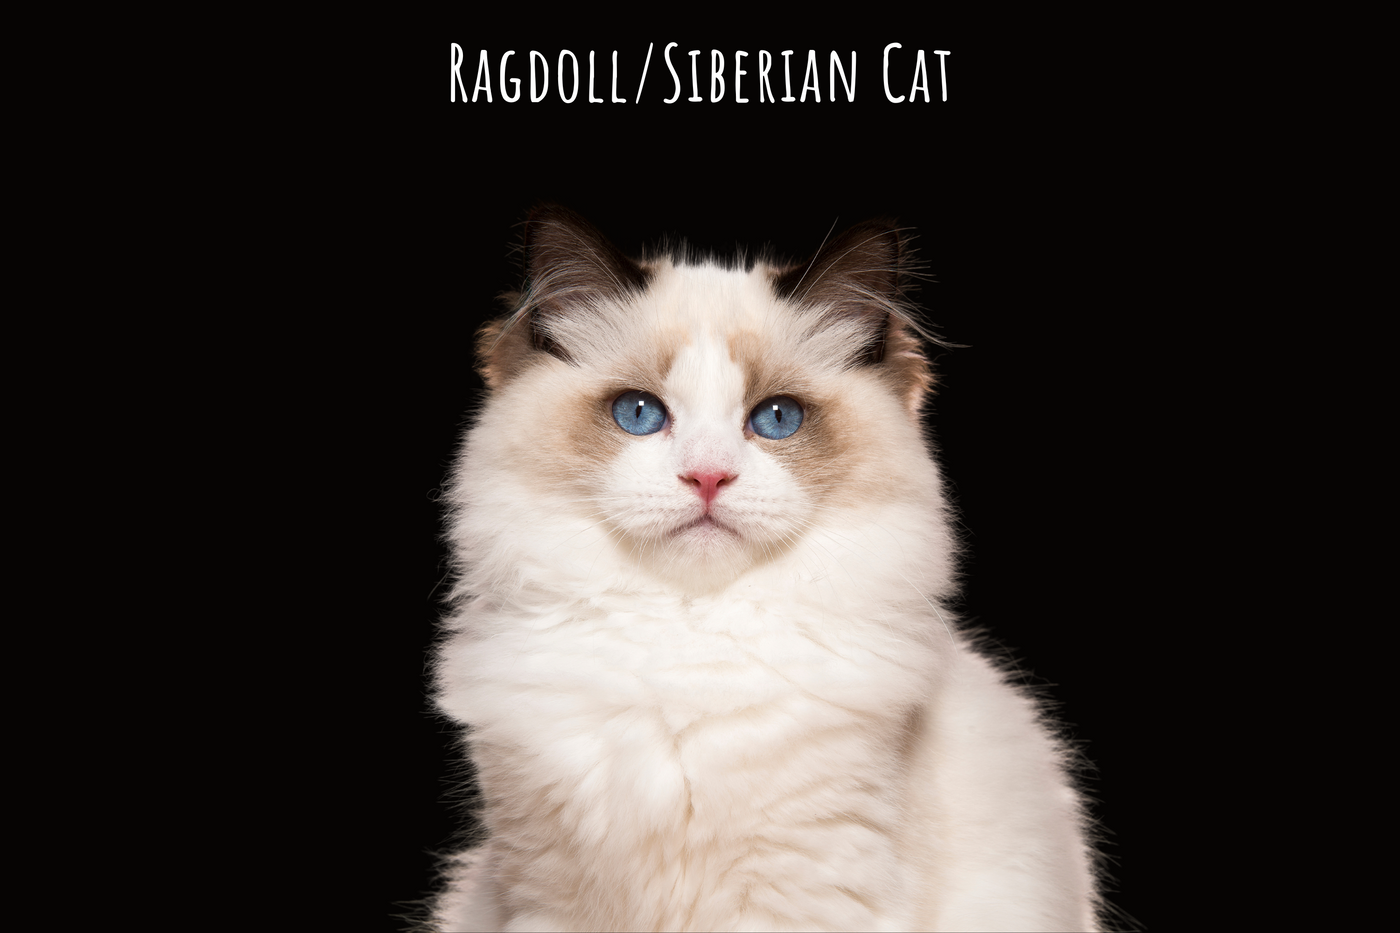 ragdoll/siberian cat sticker collection